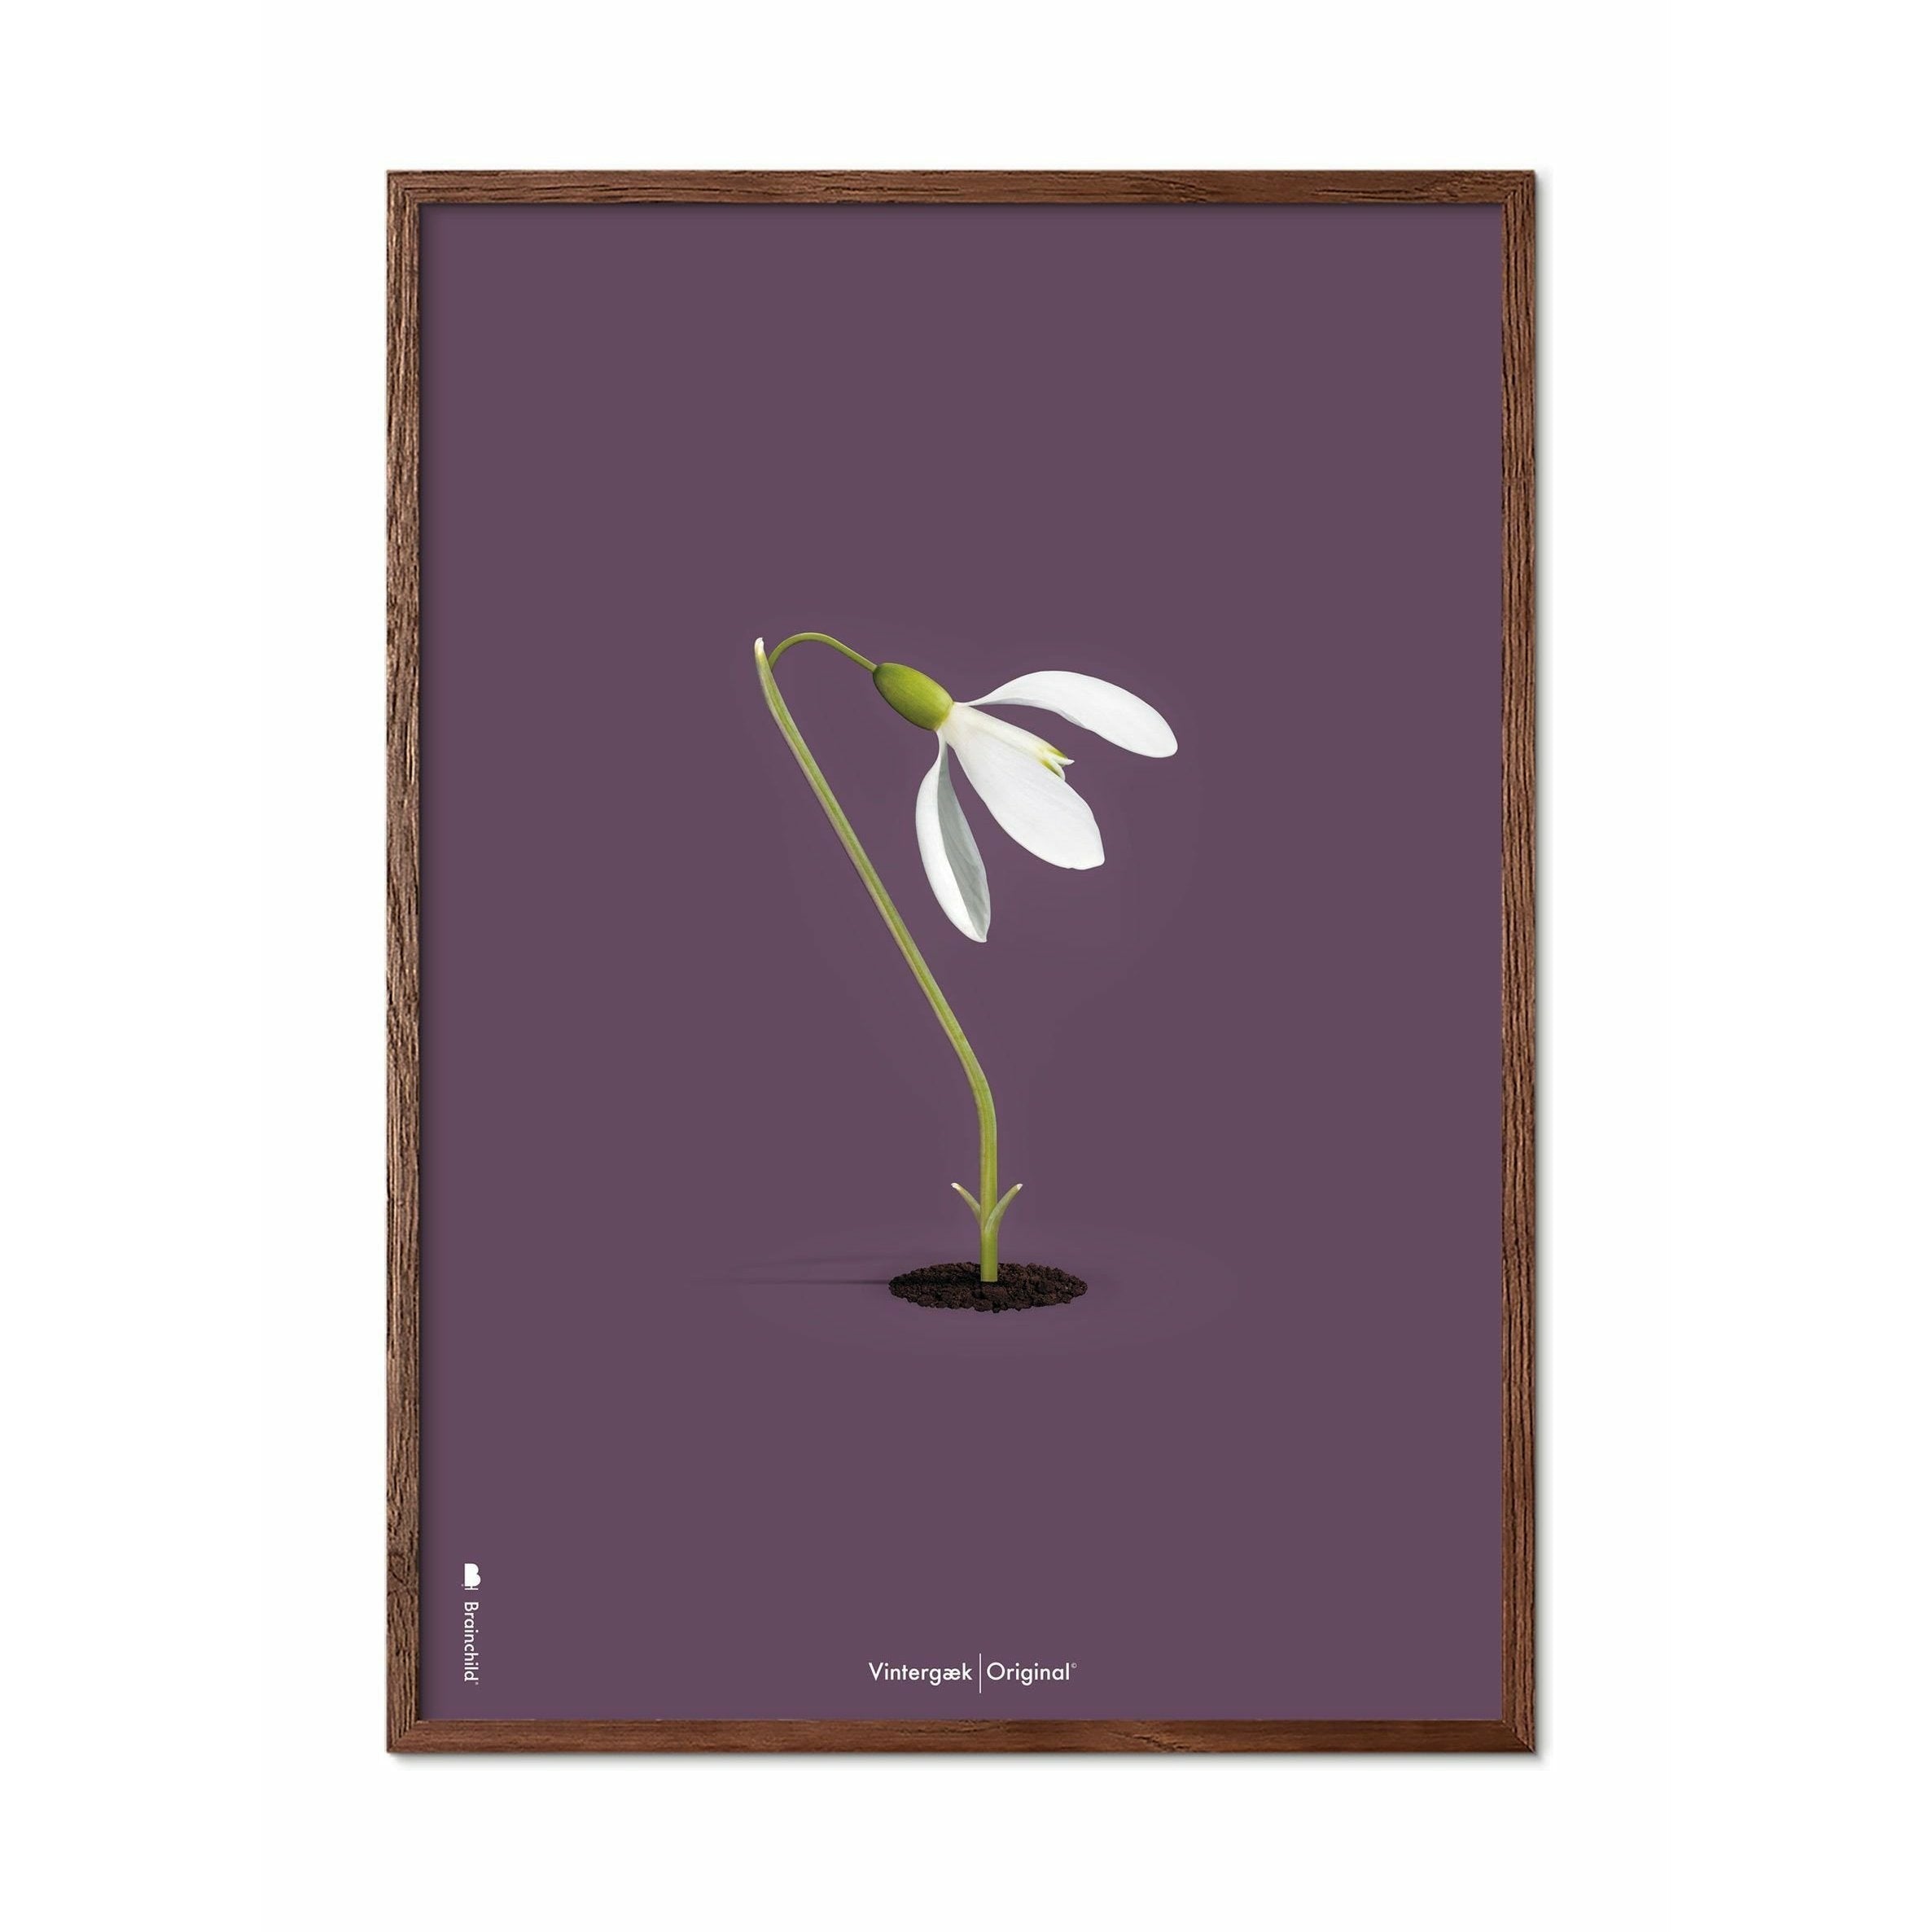 Brainchild Snowdrop Classic Poster, Frame Made Of Dark Wood 70x100 Cm, Purple Background